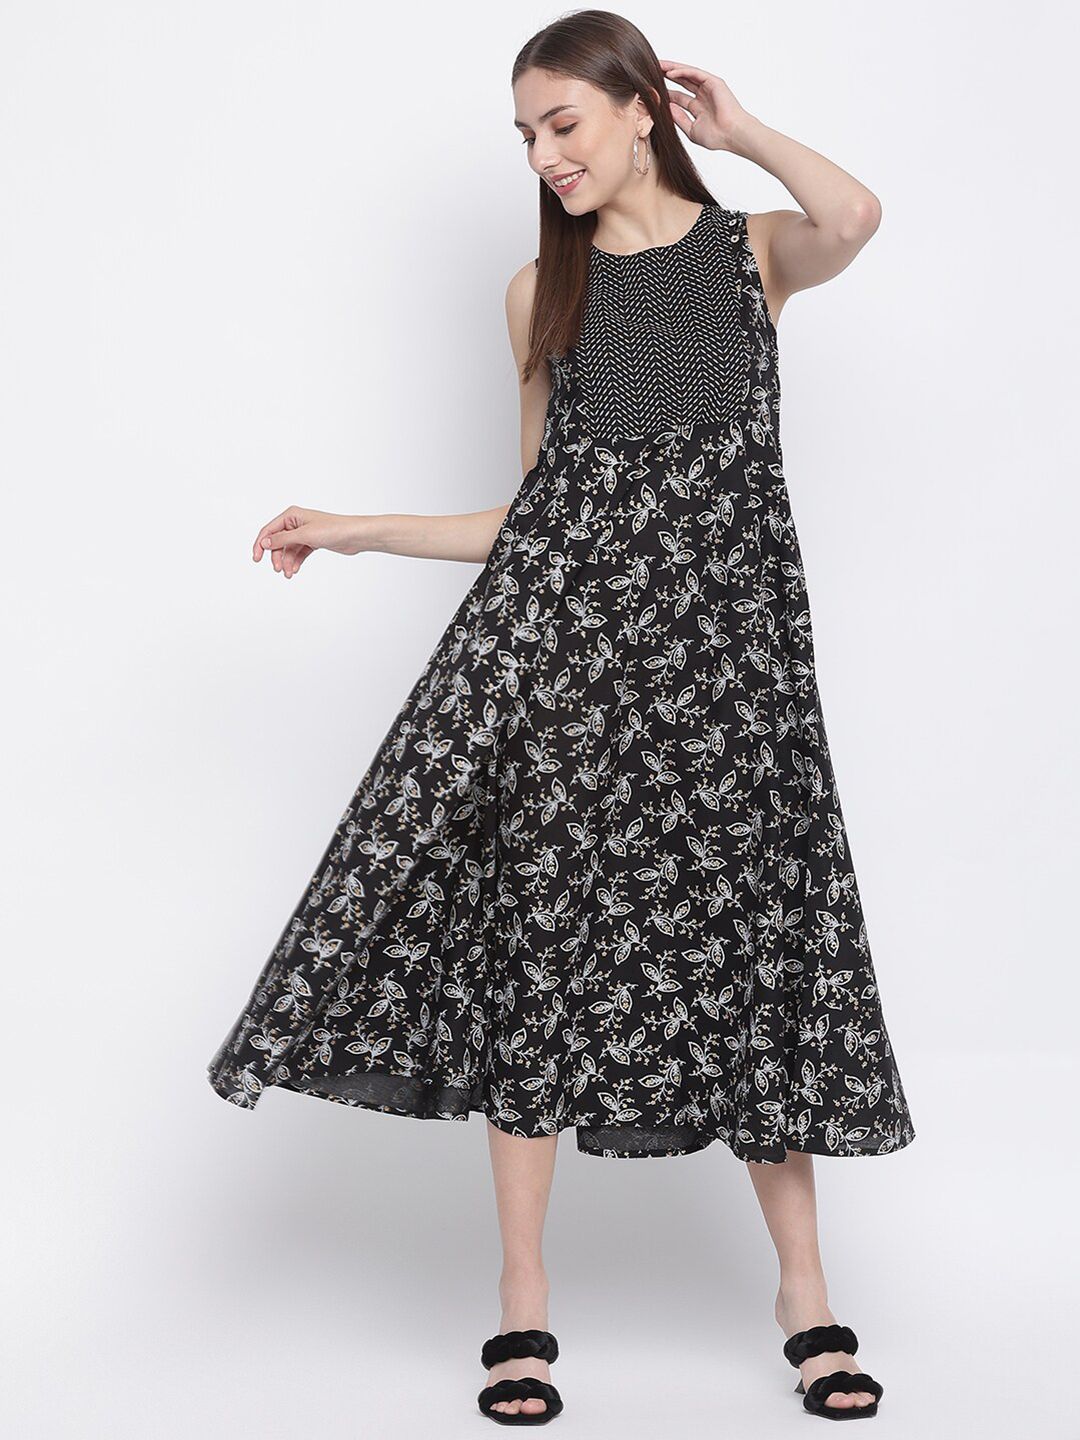 IMARA Black Floral A-Line Midi Dress Price in India